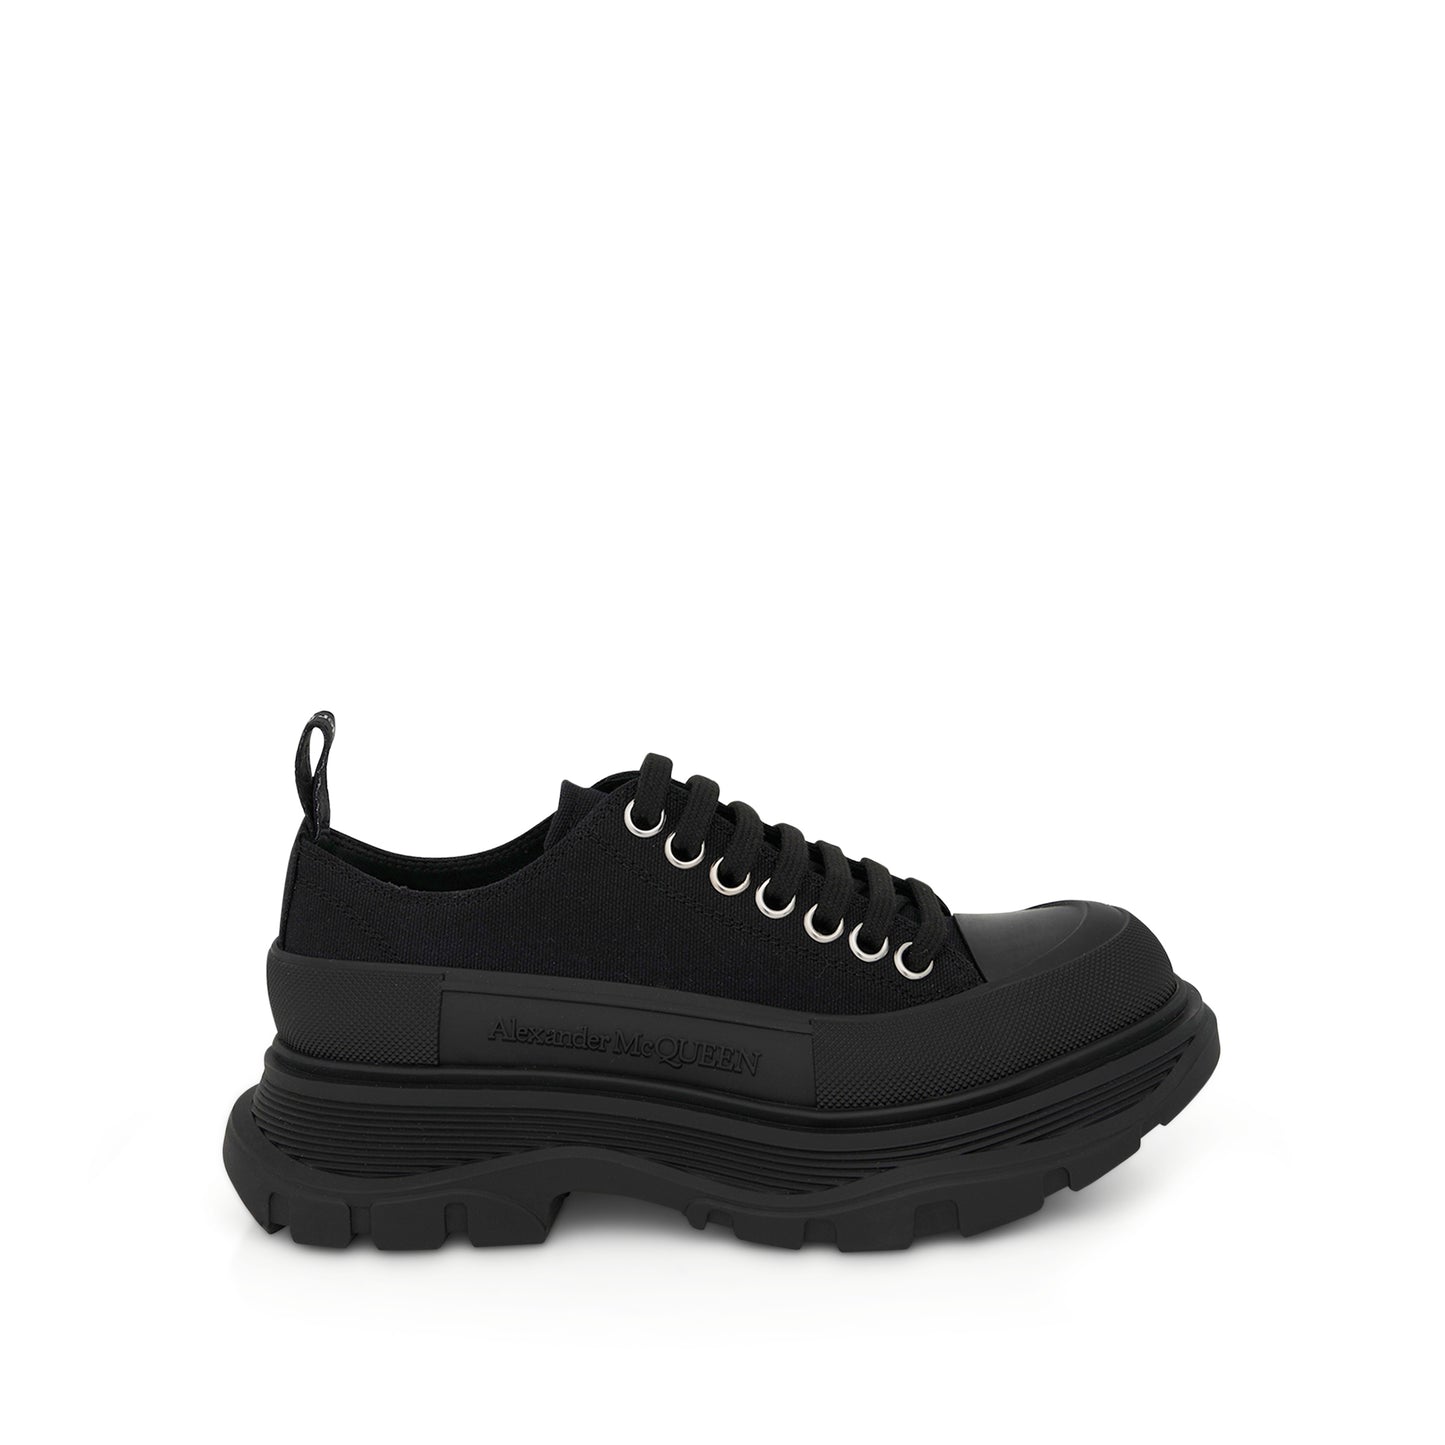 Tread Slick Lace Up Sneaker in Black/Black